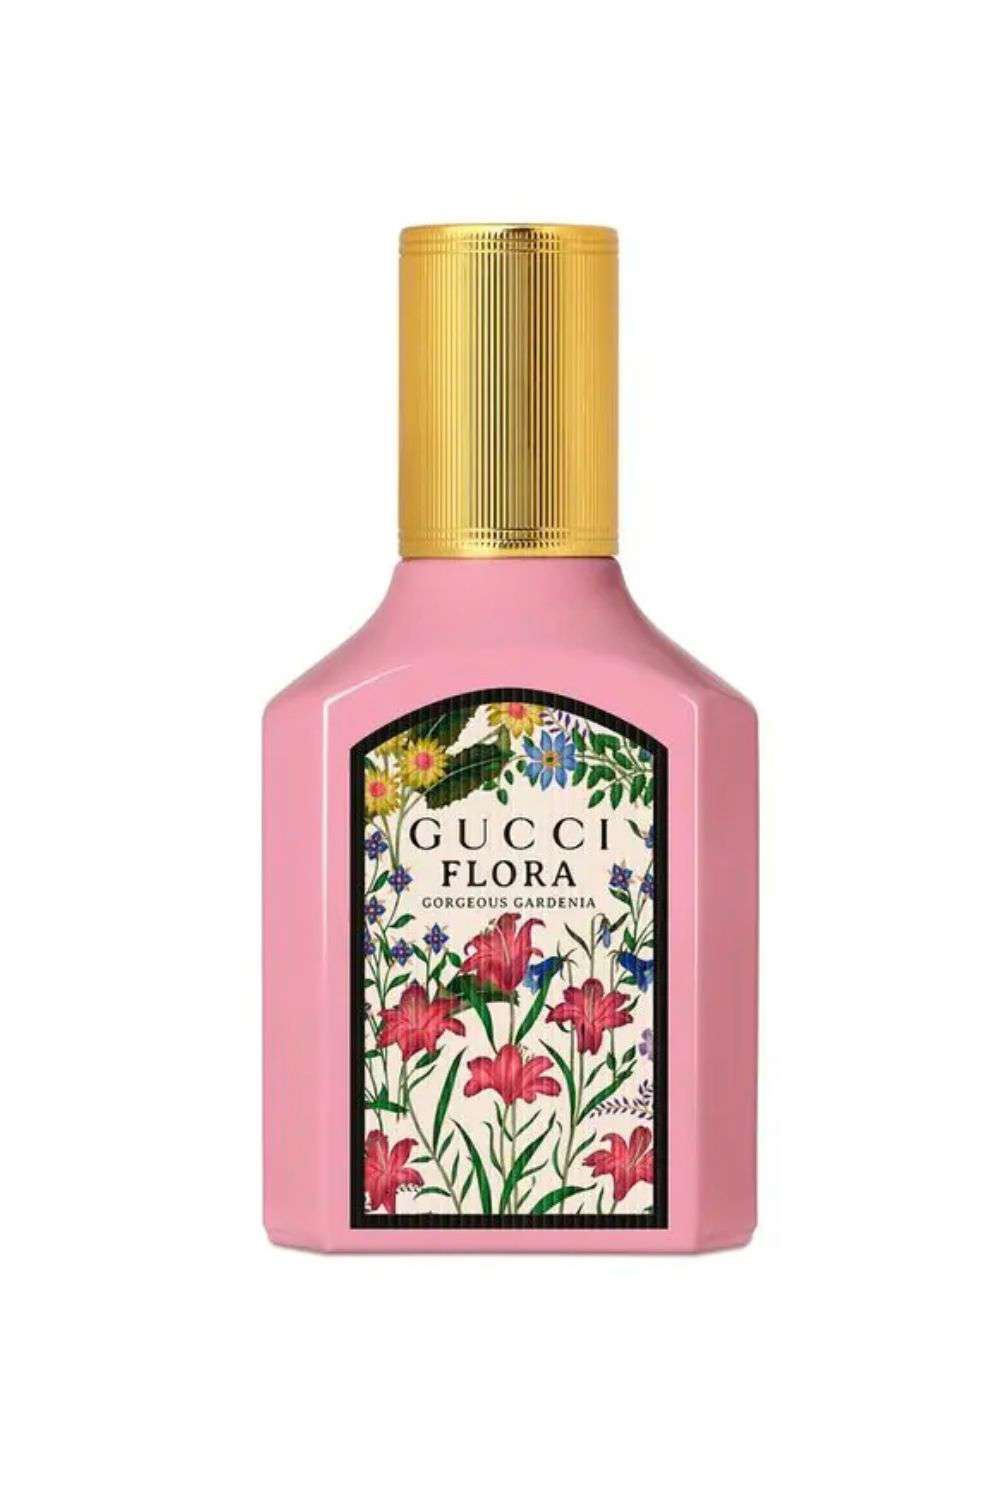 Flora Gorgeous Gardenia de Gucci